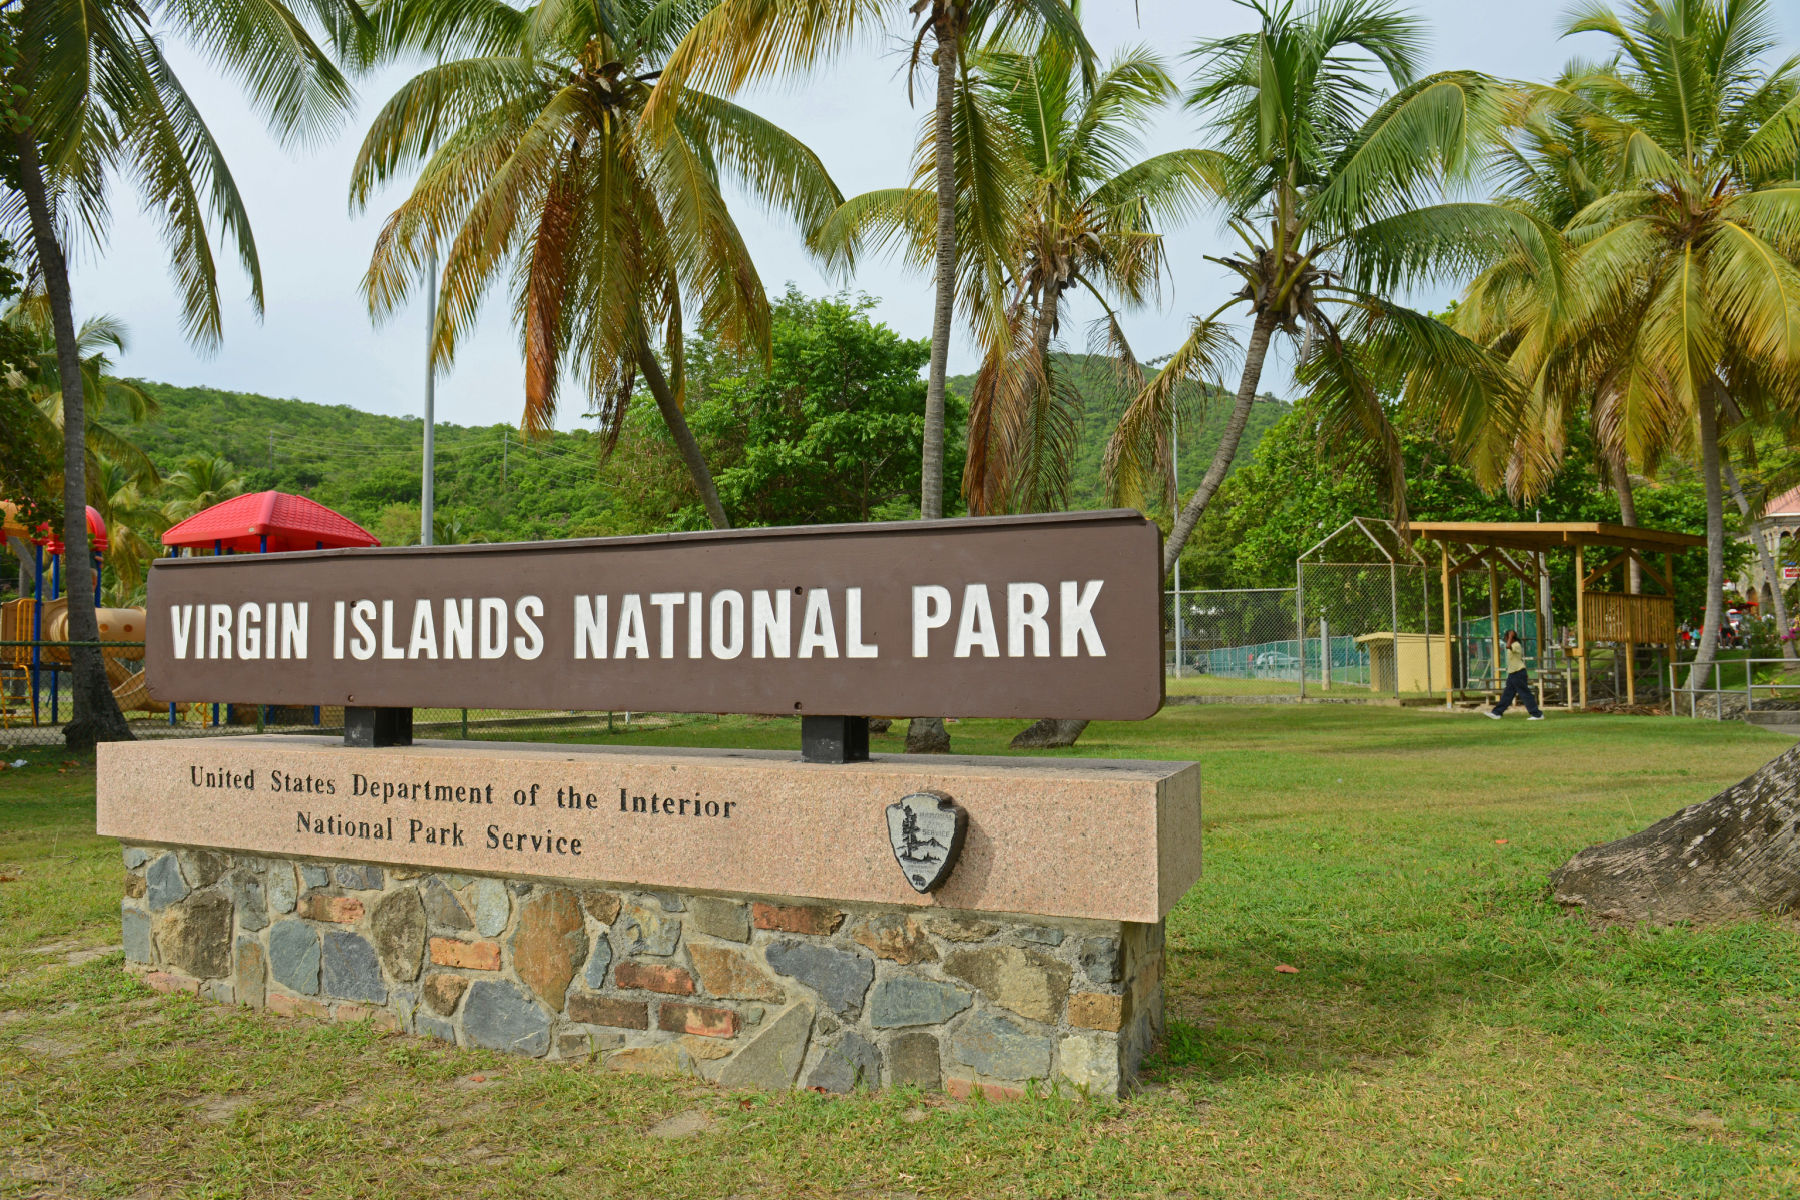 Virgin Islands National Park Facts